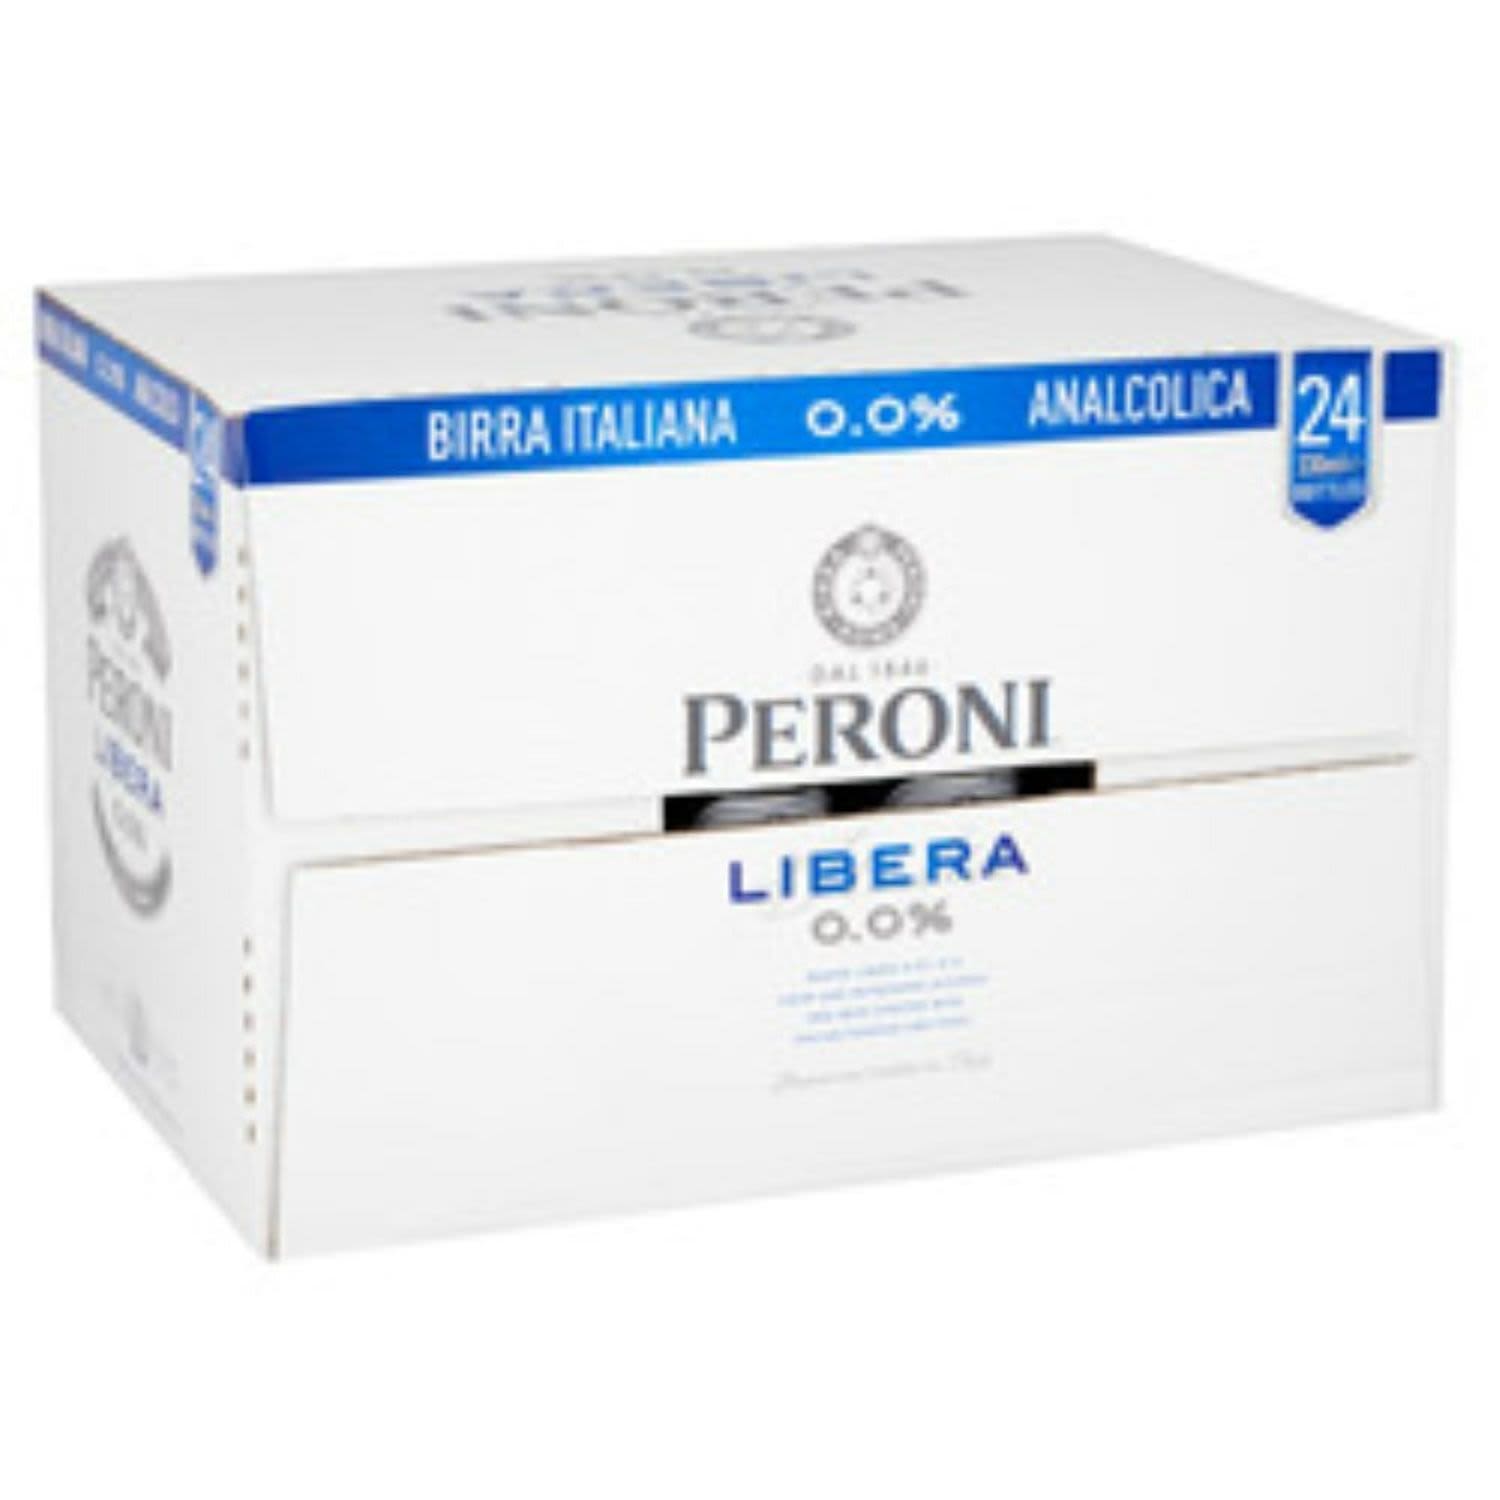 Peroni Libera 0.0% Bottle 330mL 24 Pack